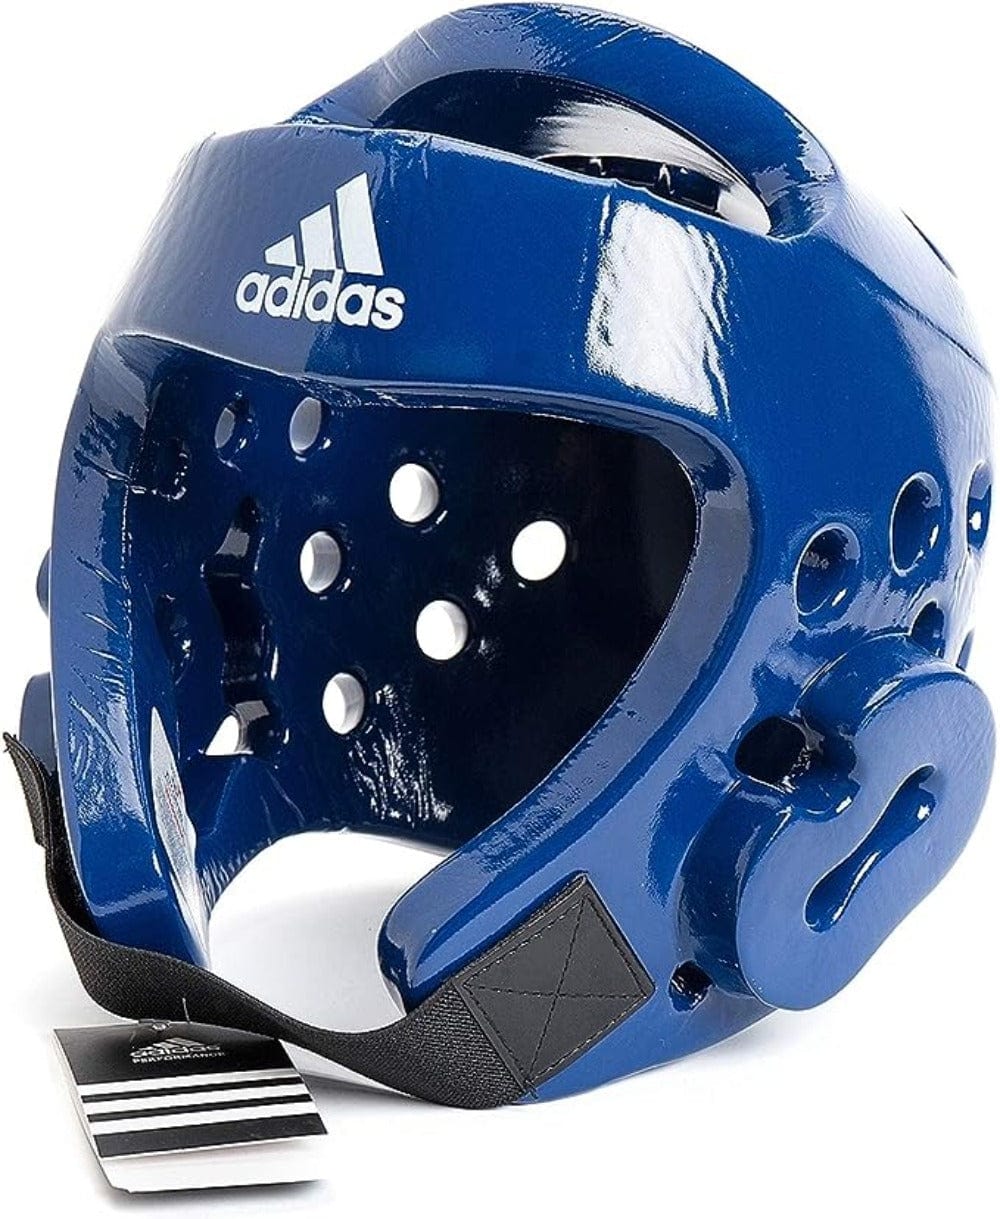 Adidas sporting goods small / Blue adidas Taekwondo Headgear 2 Color WTF Approved Head Guard